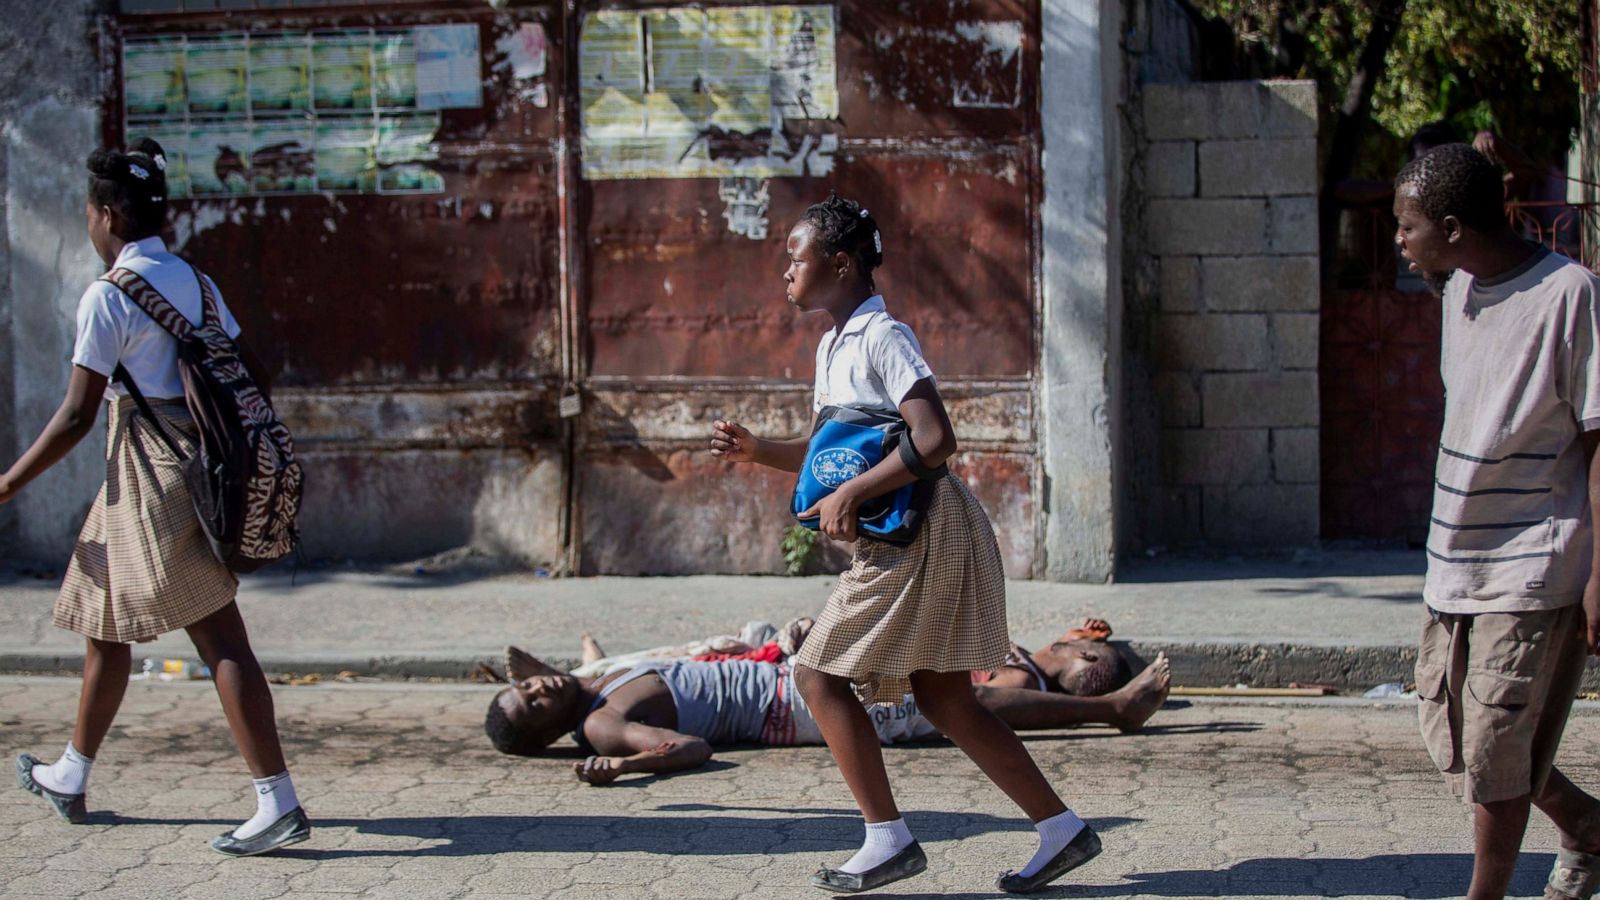 8 dead, including prison director, after Haiti jail break - ABC News